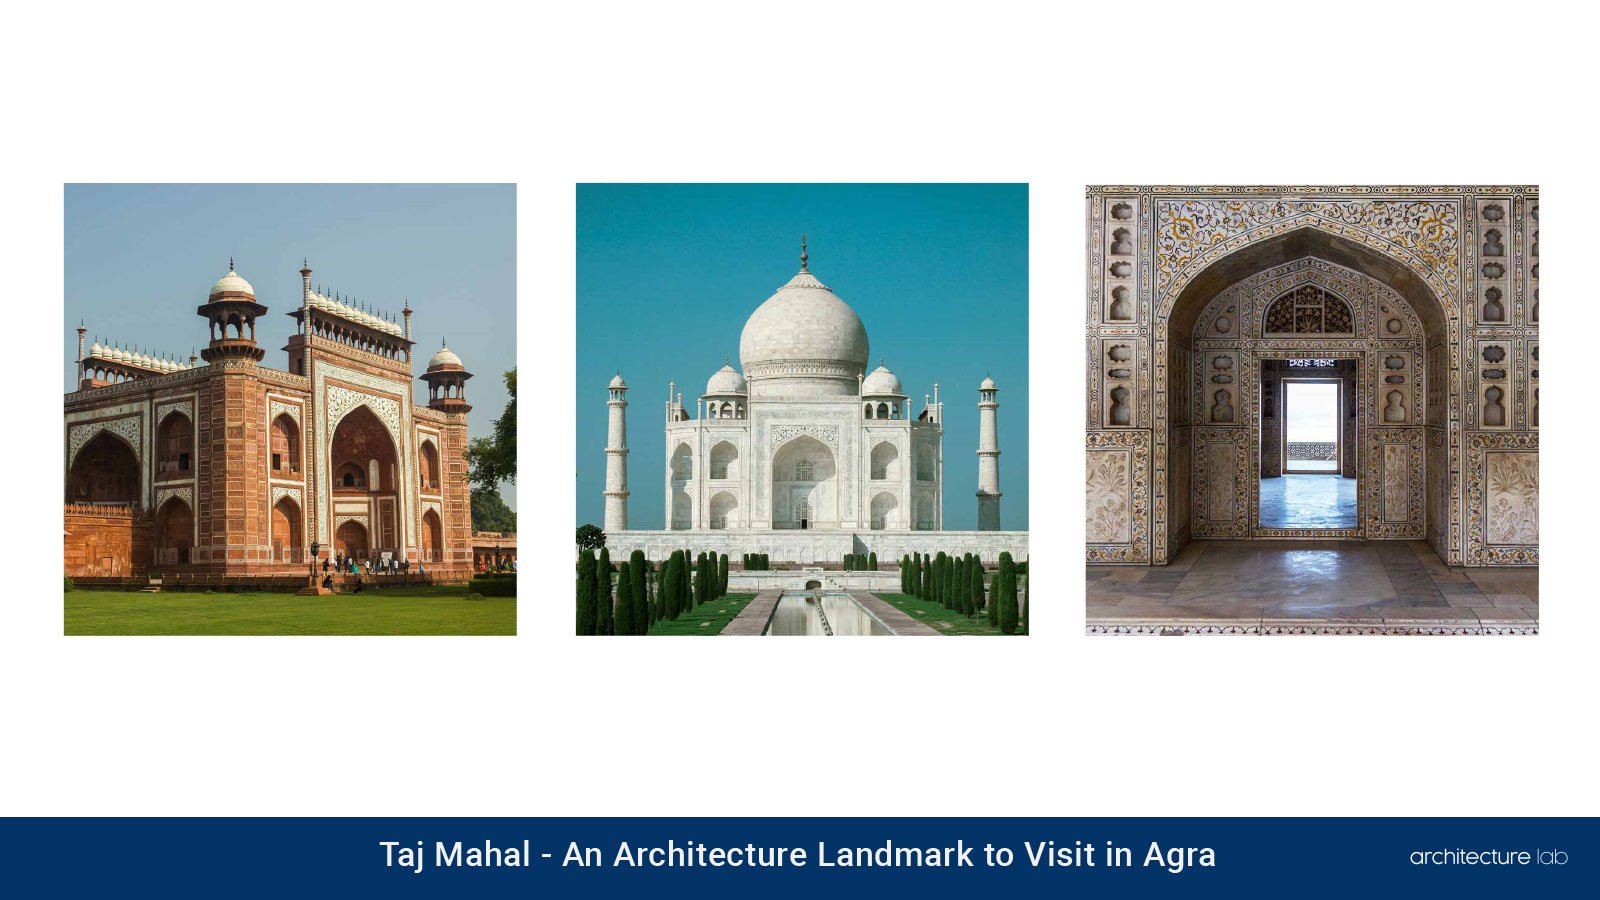 Taj mahal: an architecture landmark to visit in agra